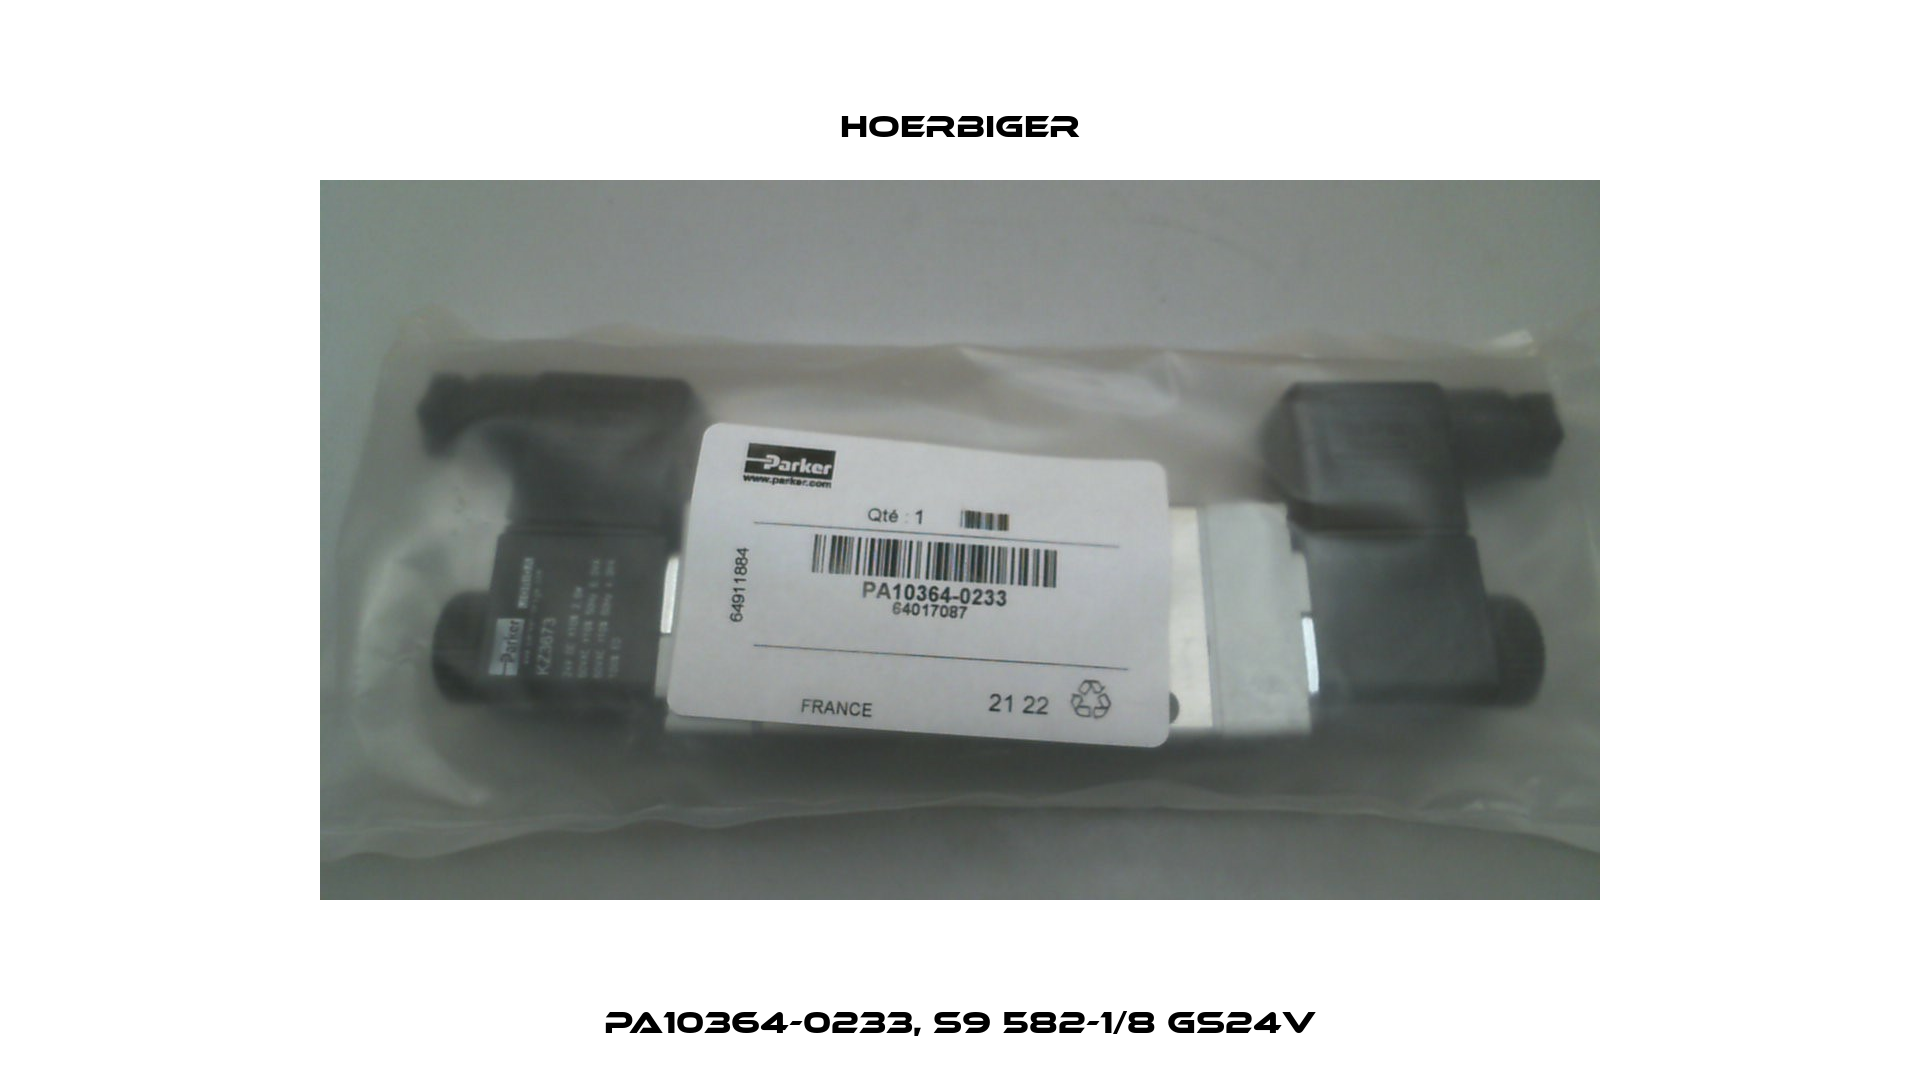 PA10364-0233, S9 582-1/8 GS24V Hoerbiger